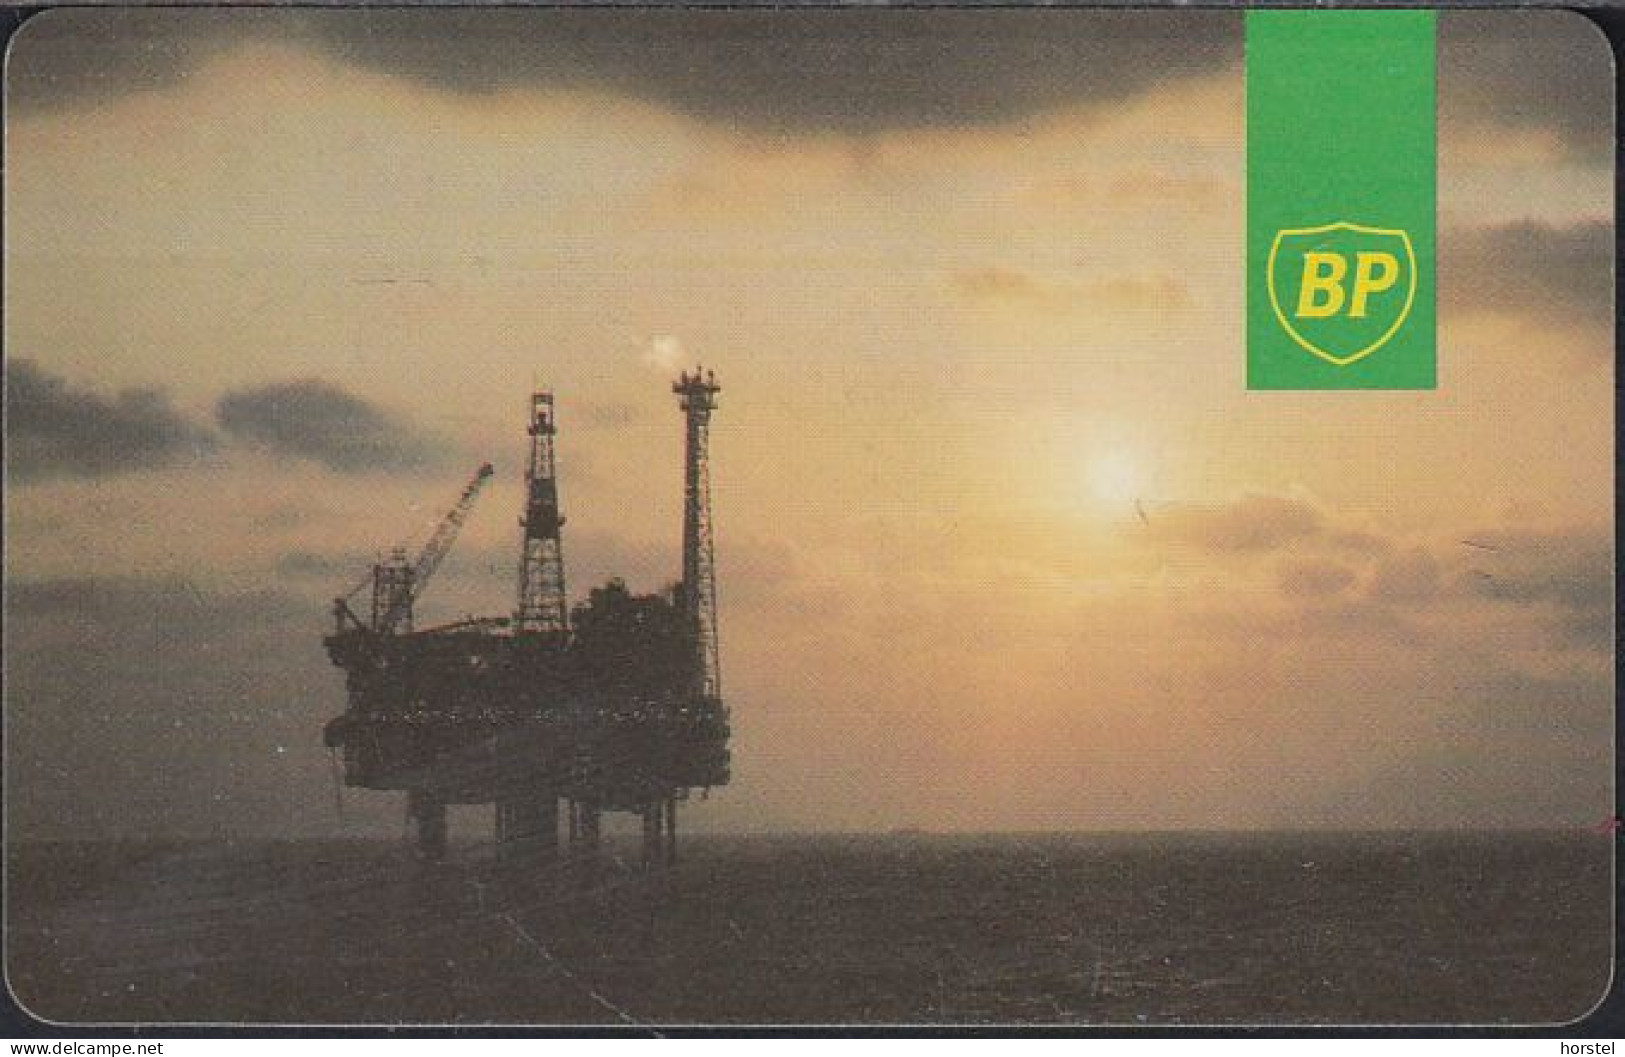 UK - GB-OIL-AUT-0001 Payphone IPL Autelca - BP - Oil Bohrinsel - 20 Units - Mint - Piattaforme Petrolifere